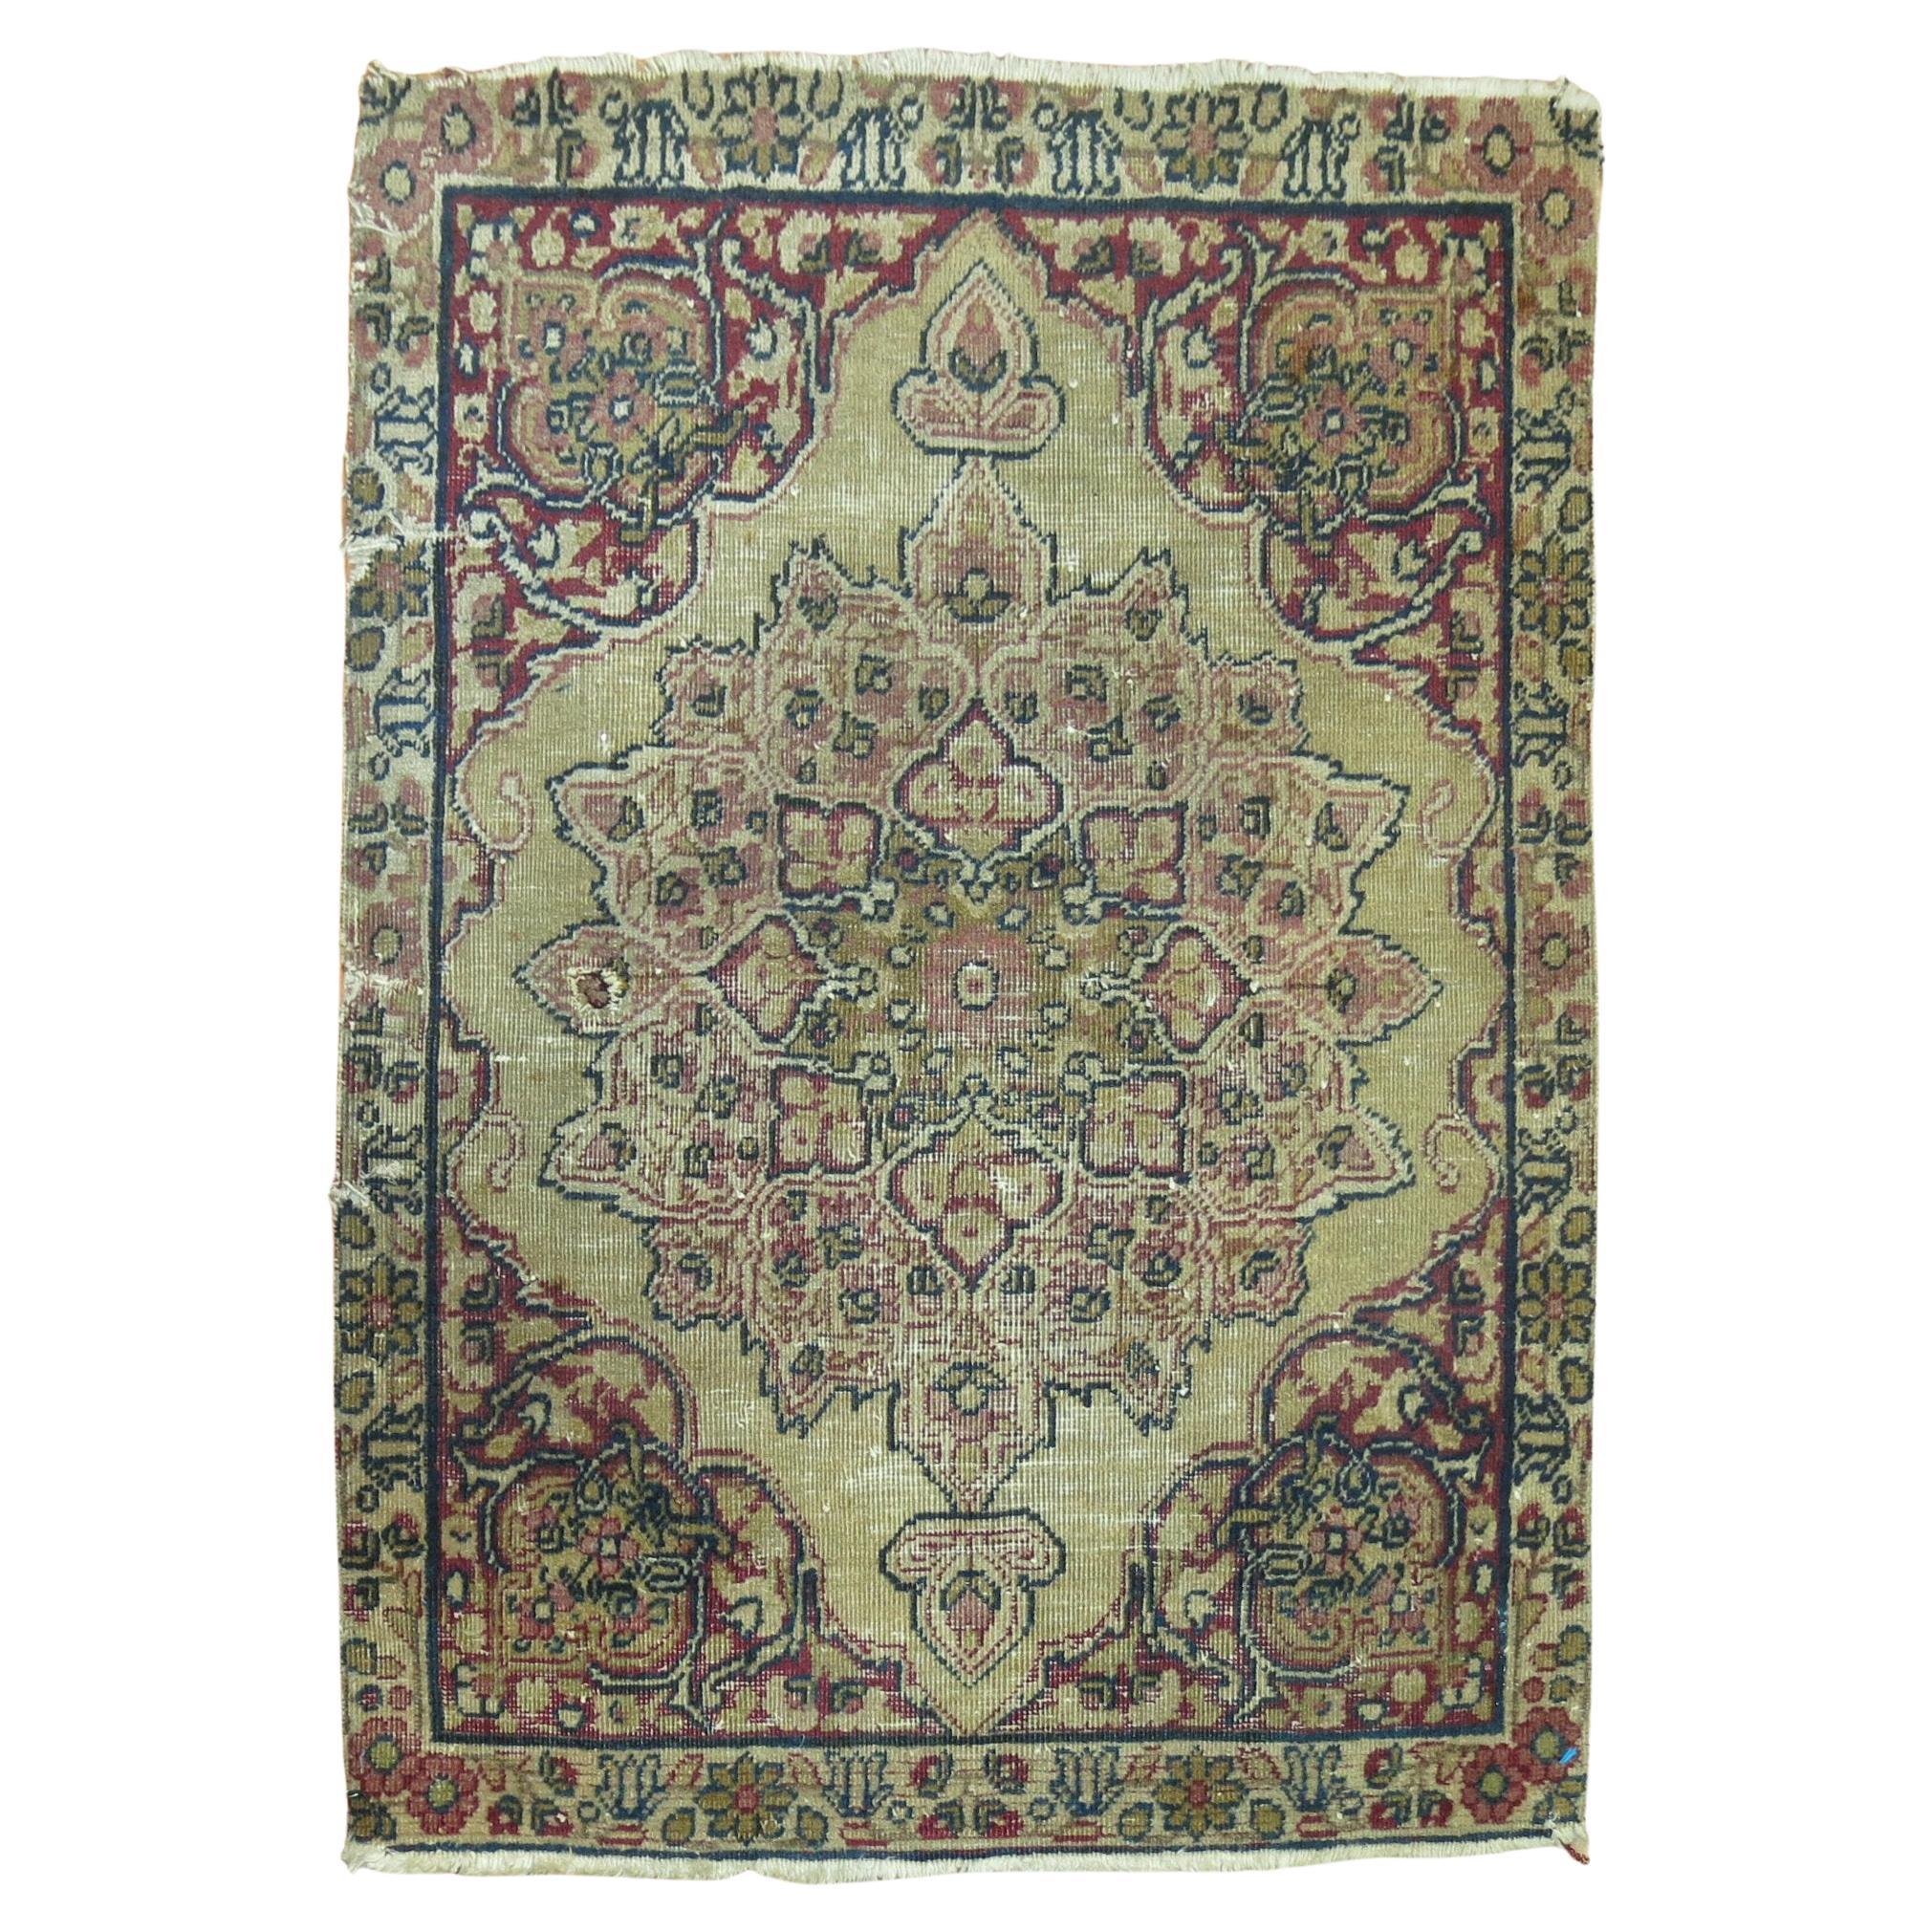 Mini tapis Lavar Kerman de la collection Zabihi du 19ème siècle